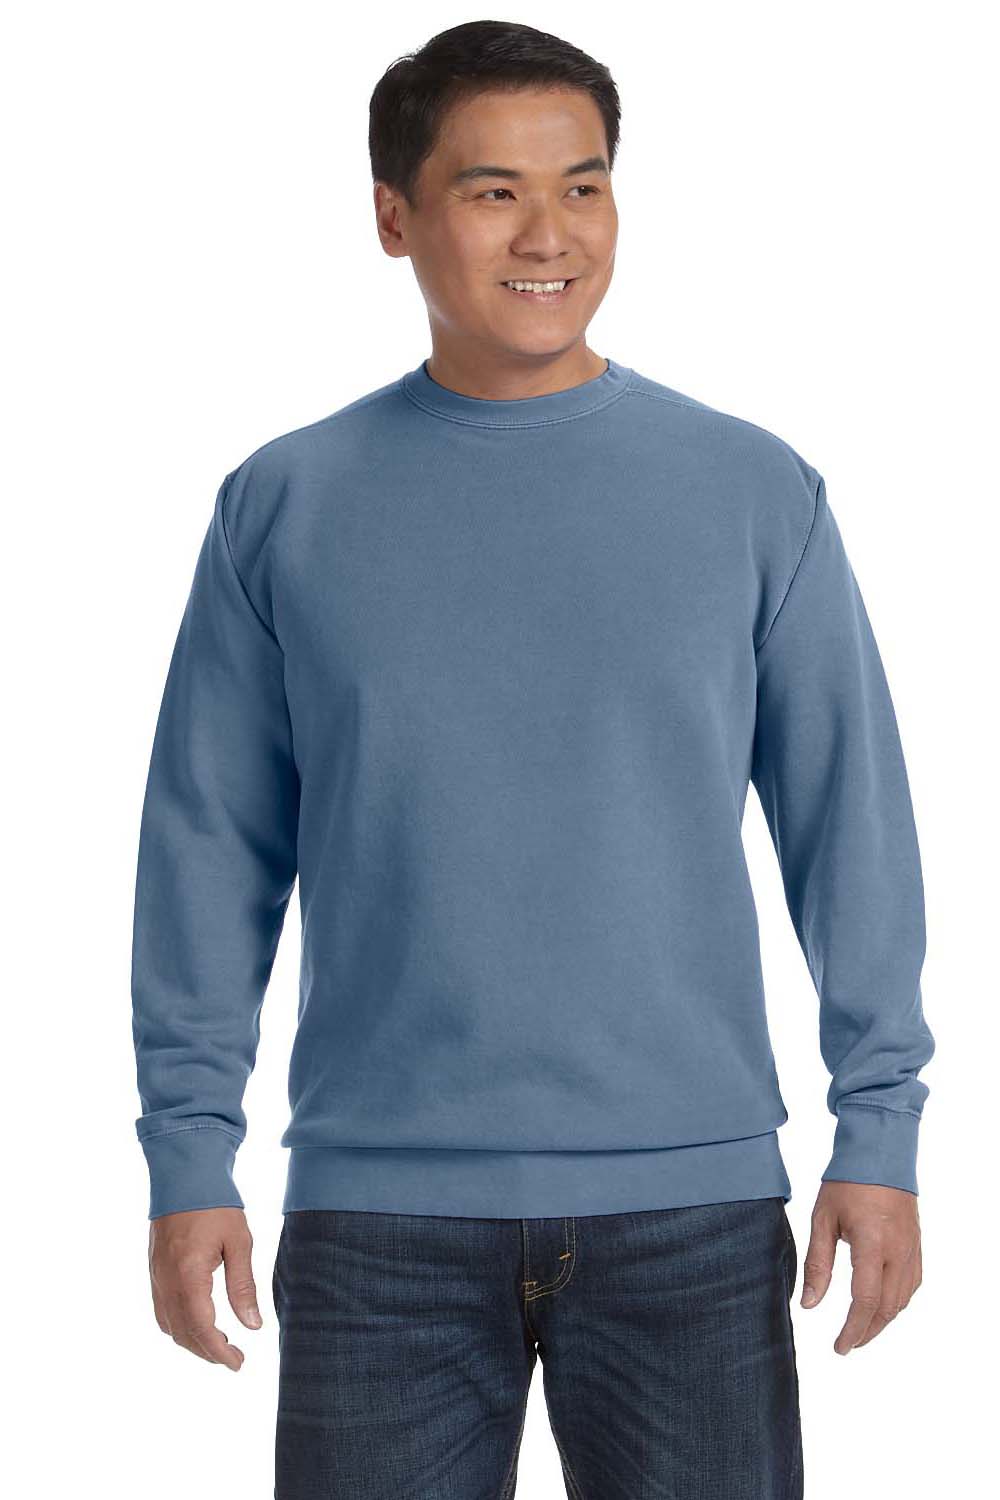 Comfort Colors 1566 Mens Crewneck Sweatshirt Blue Jean Front